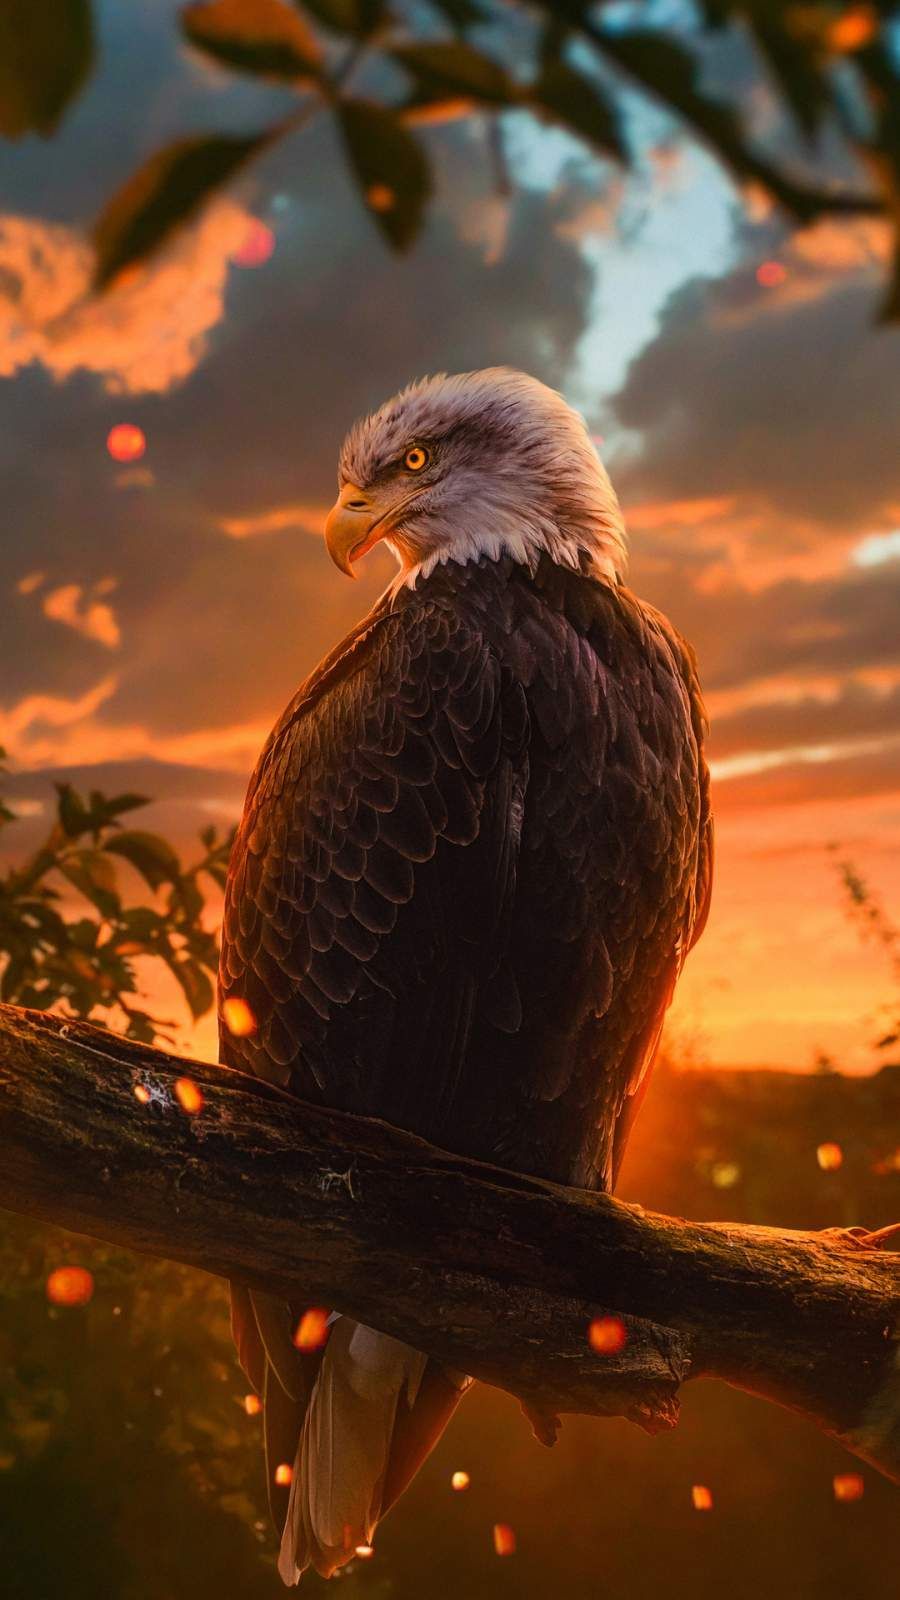 Golden Eagle iPhone Wallpaper. Eagle wallpaper, Bald eagle, Wild animal wallpaper